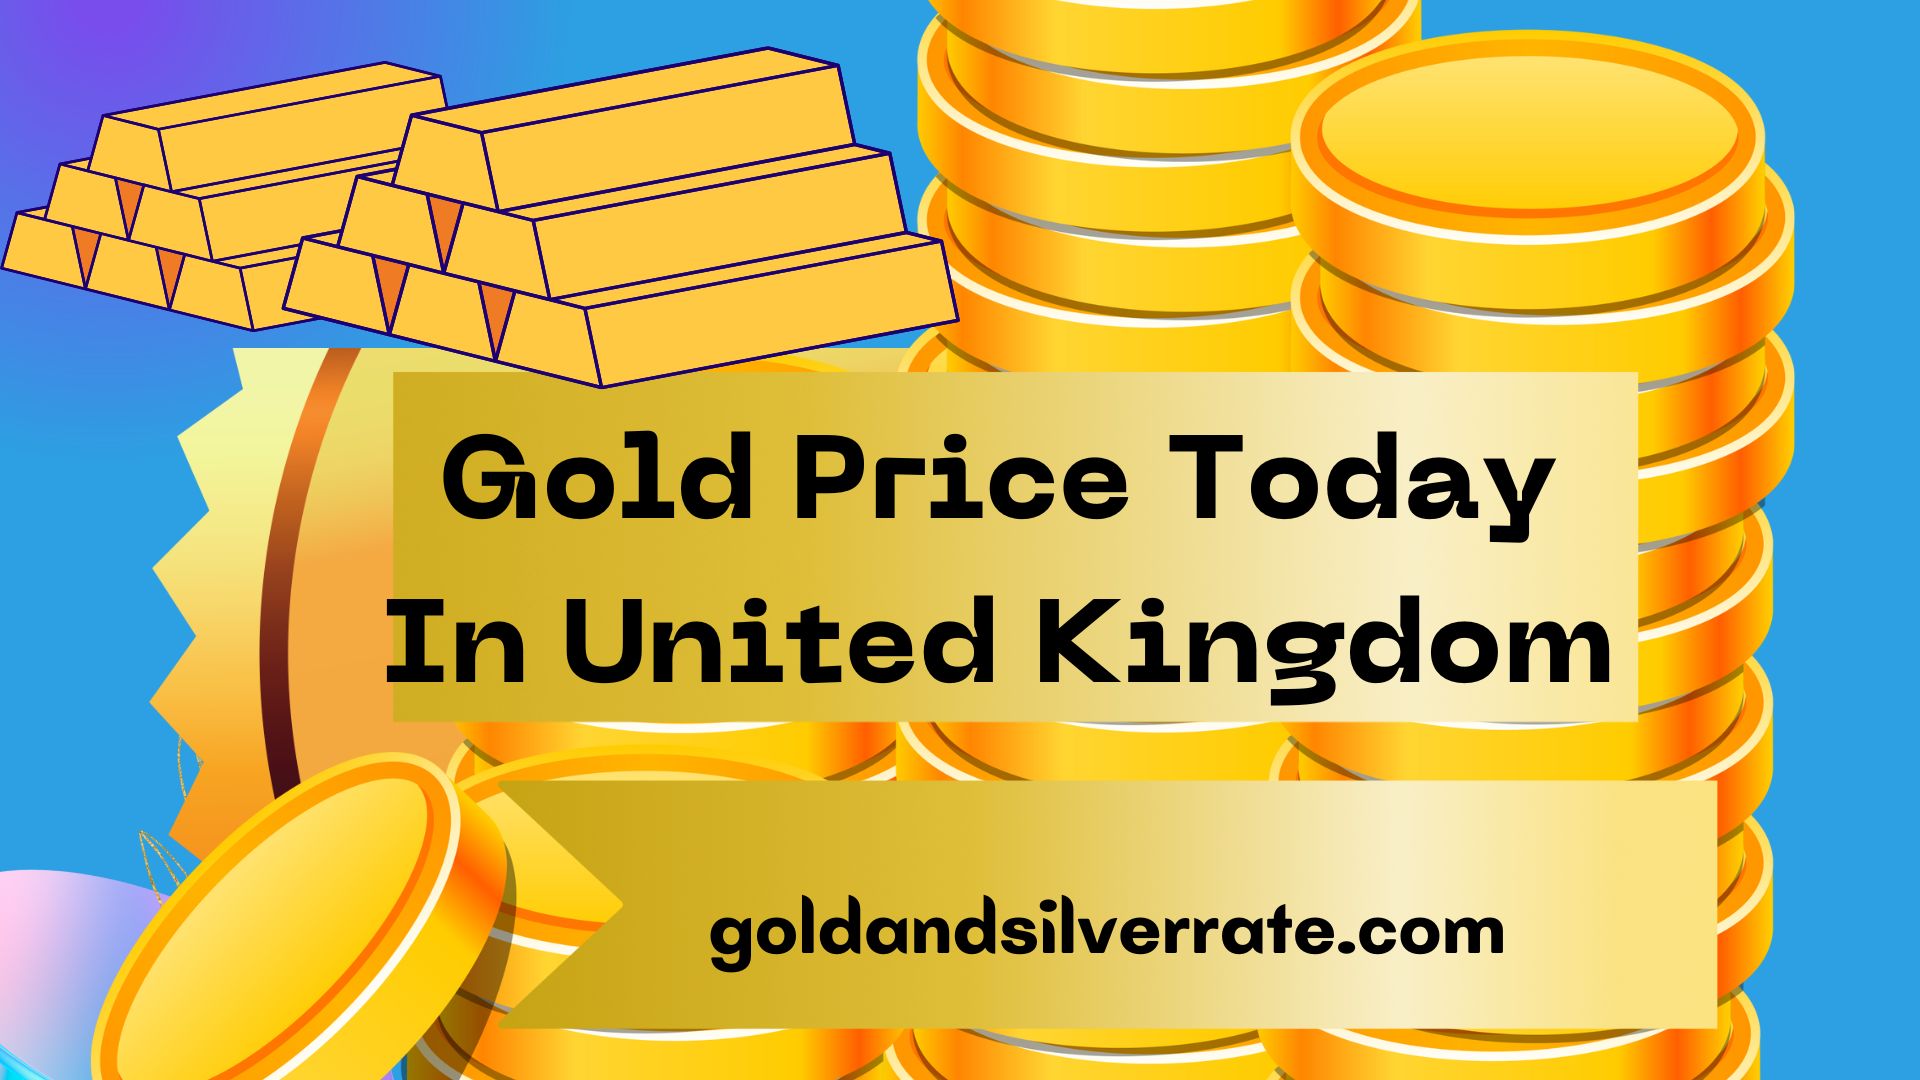 GOLD PRICE TODAY IN UNITED KINGDOM